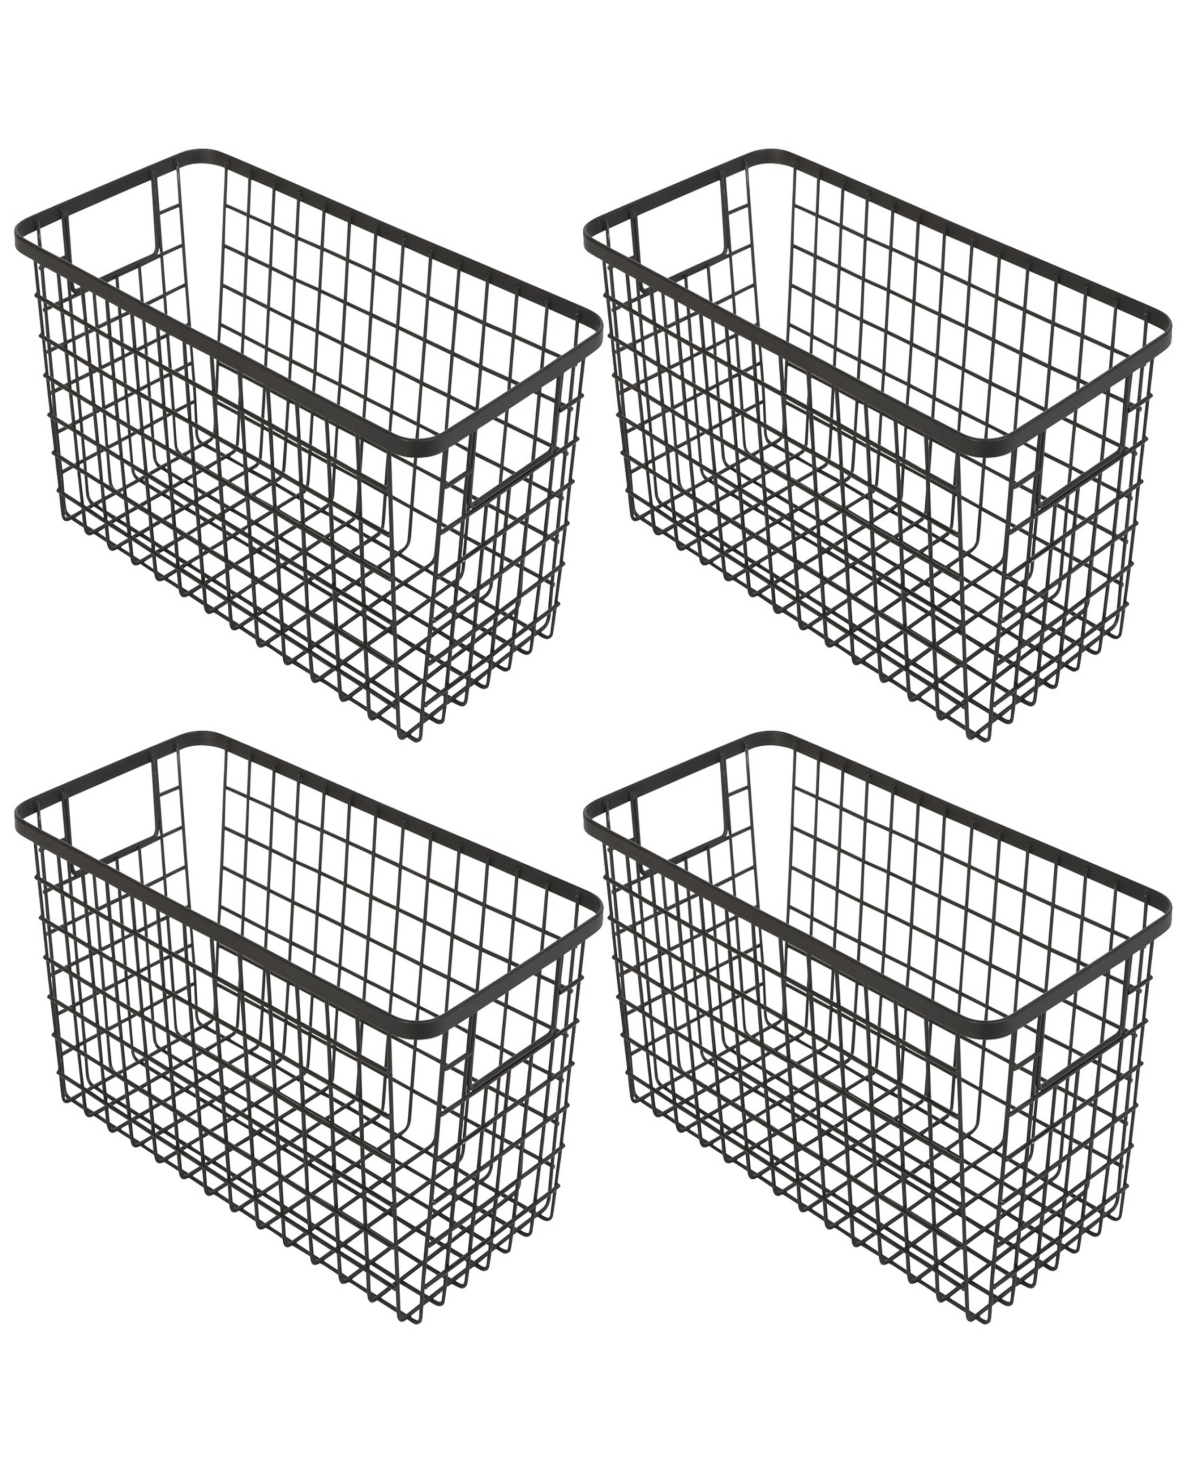 Nestable 6" x 12" x 6" Basket Organizer with Handles, Set of 4 - Black